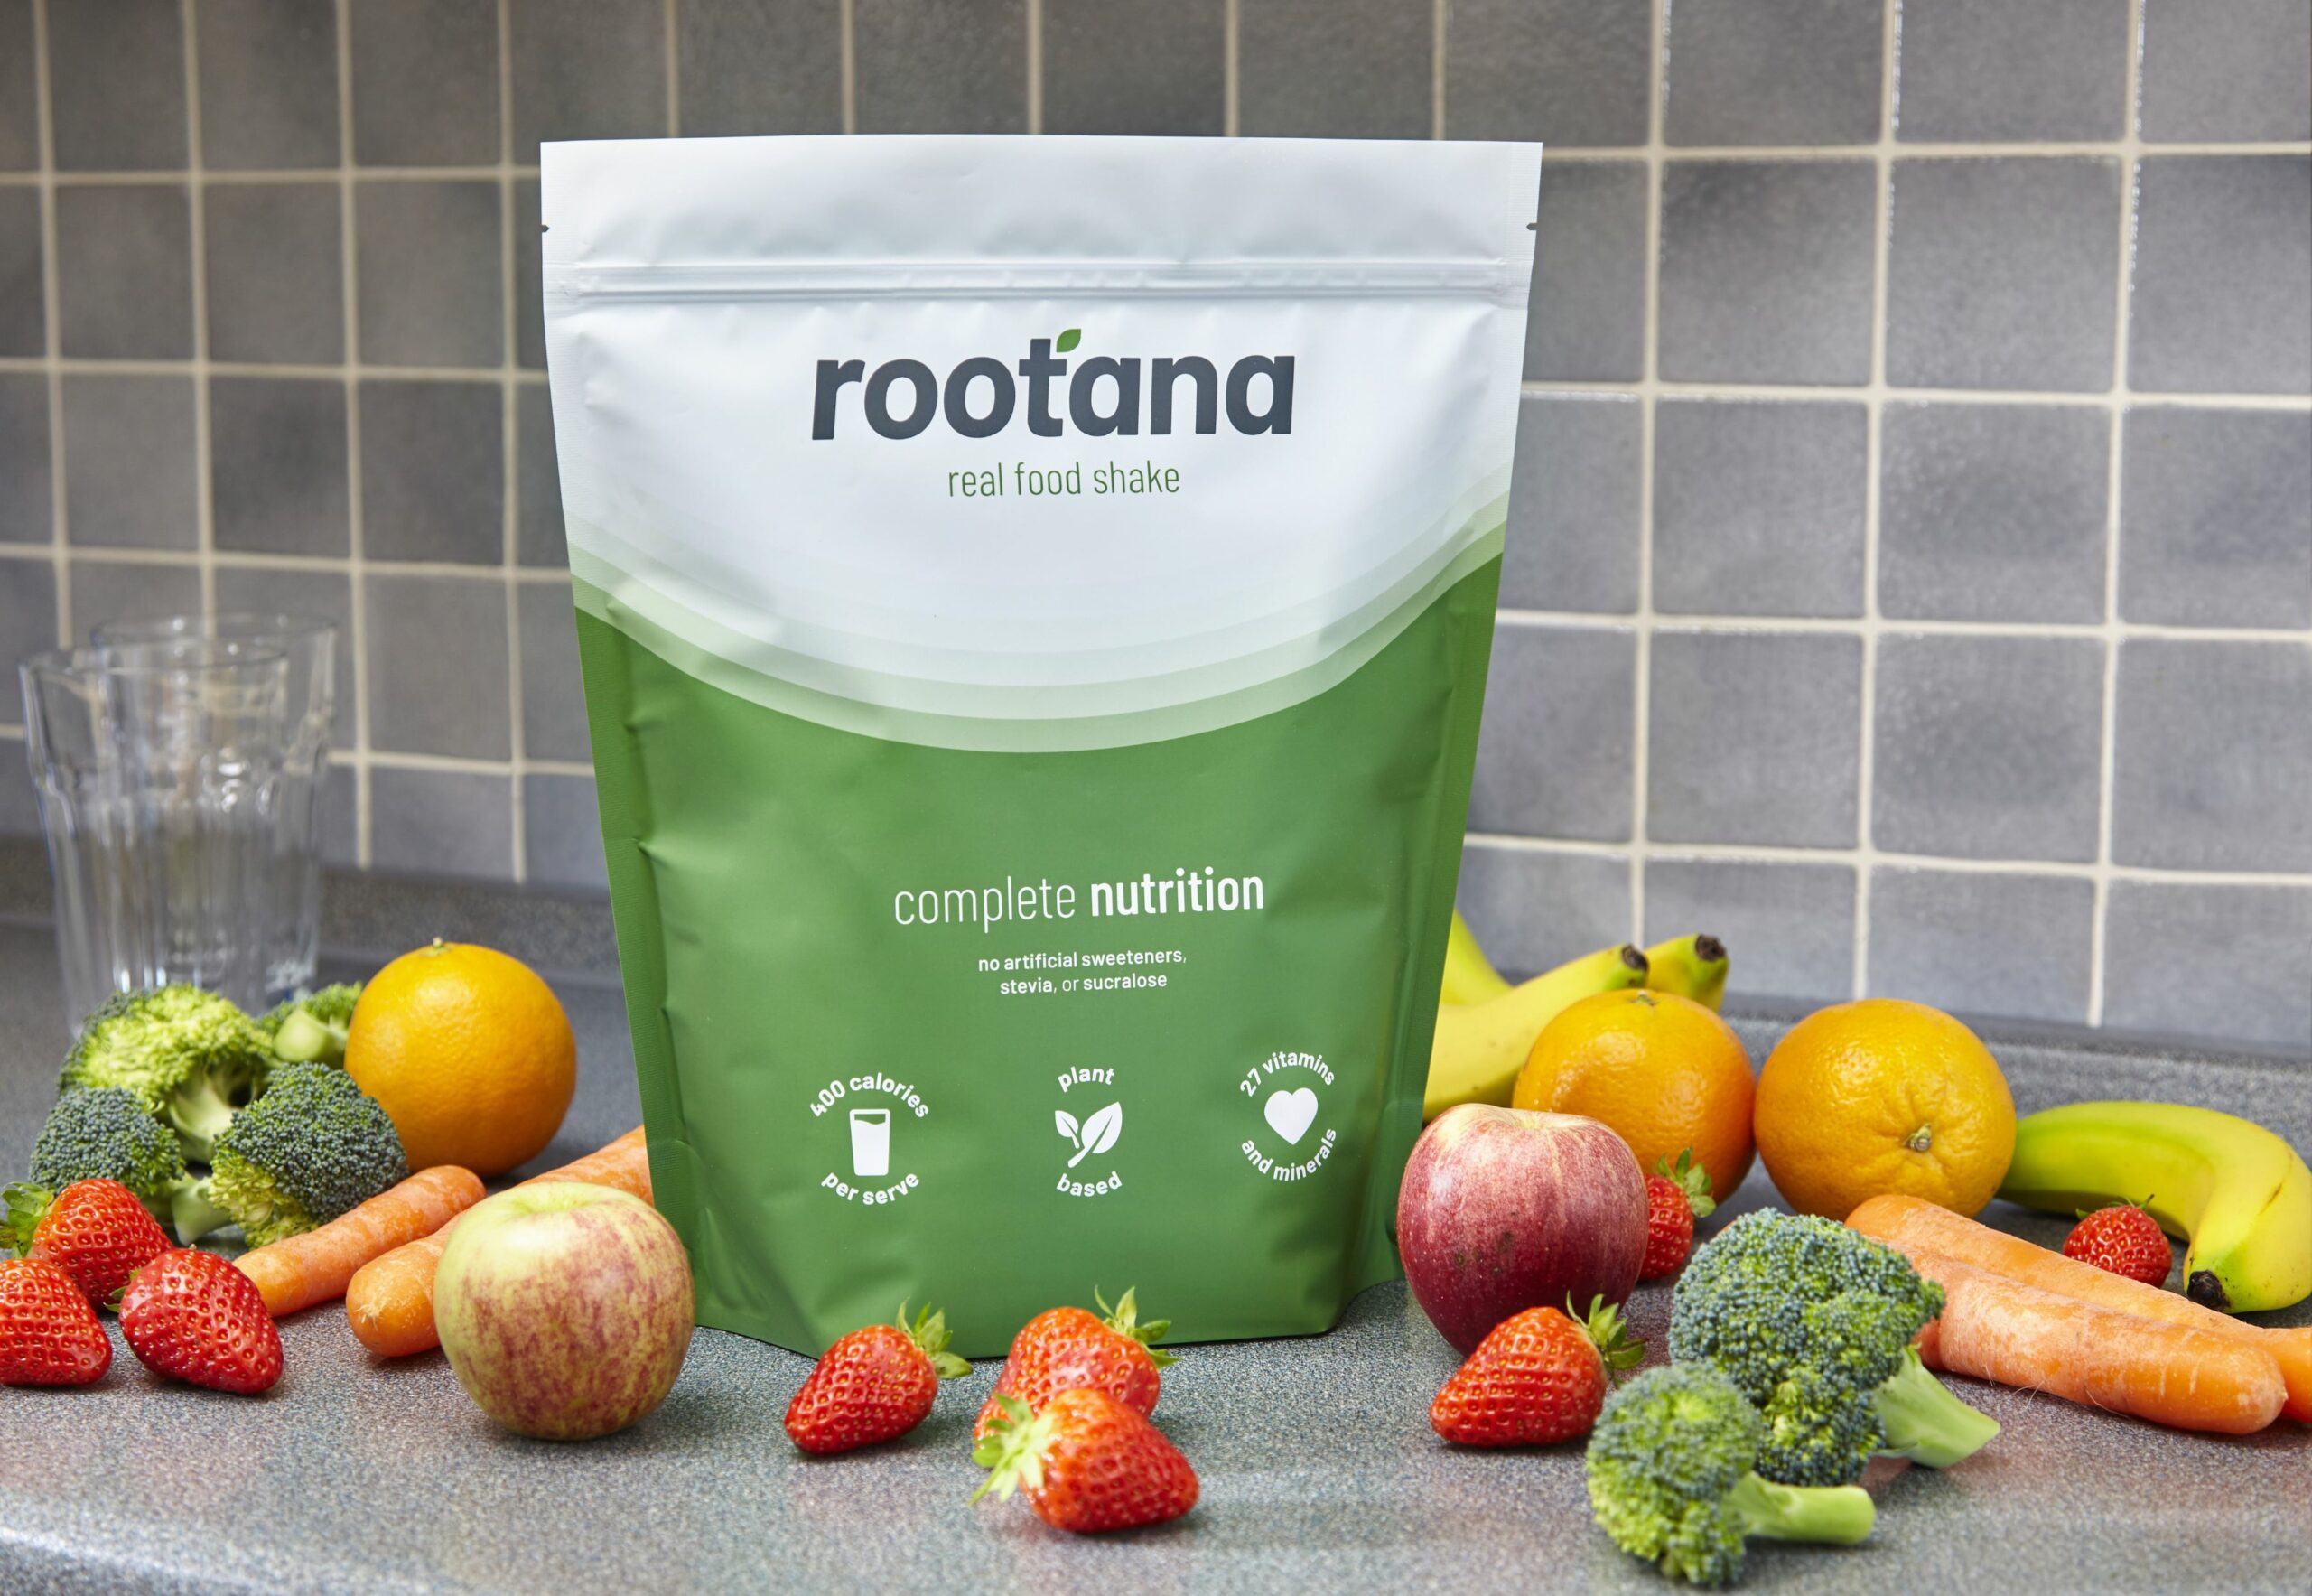 Rootana health benefits